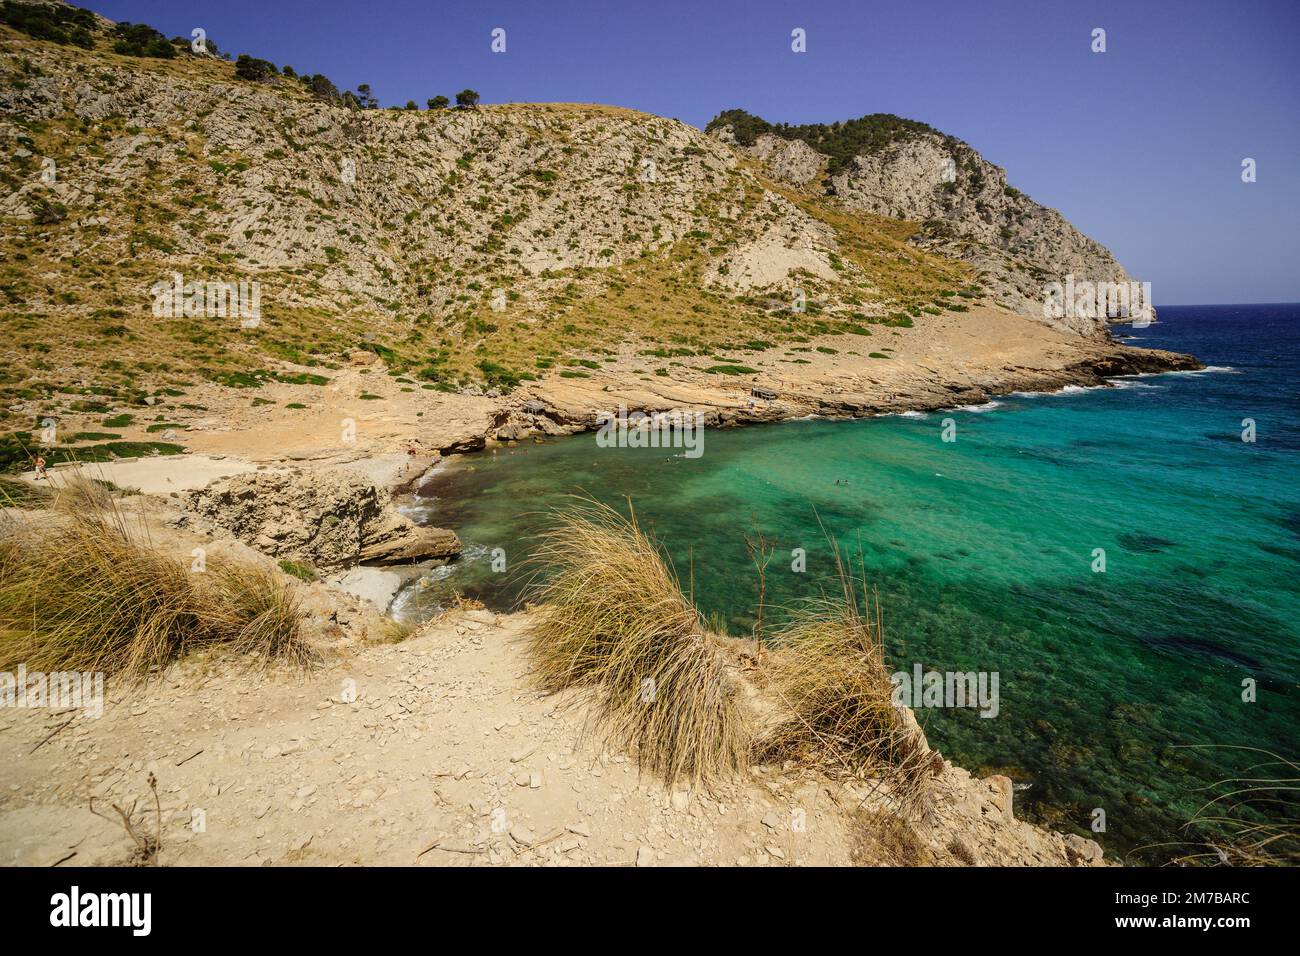 Cala Figuera beach, Formentor peninsula, Pollença. Sierra de Tramuntana Natural Park. Majorca. Balearic Islands. Spain. Stock Photo